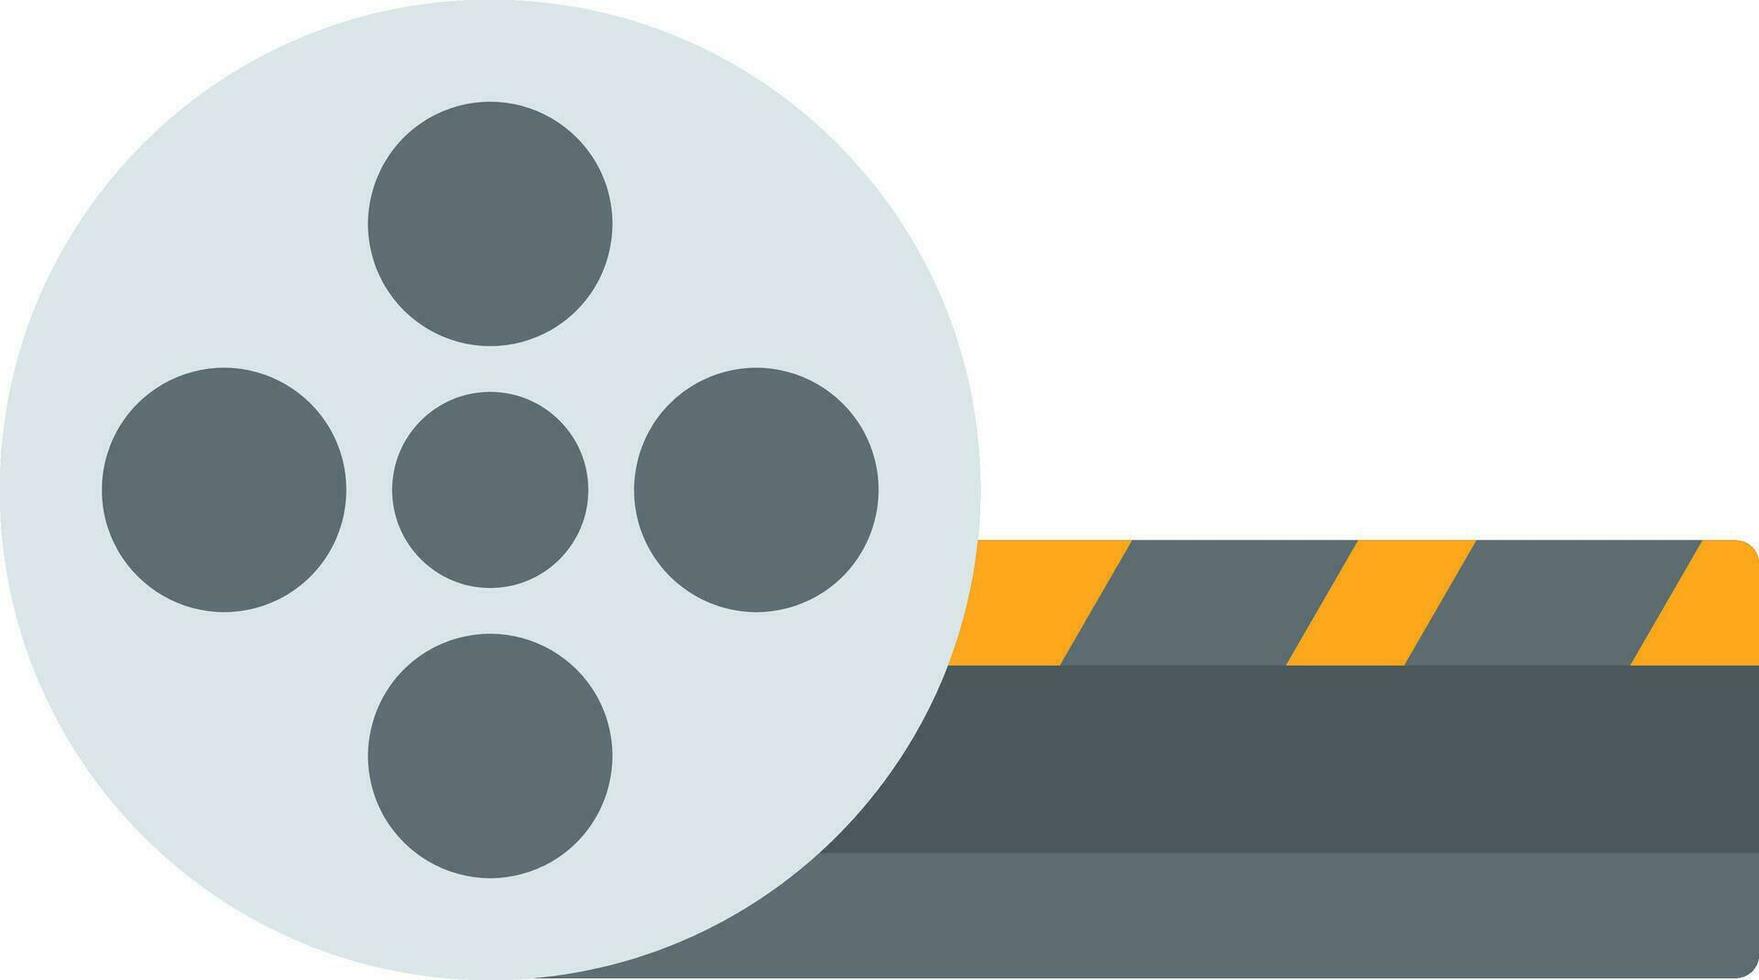 film rulle vektor ikon design